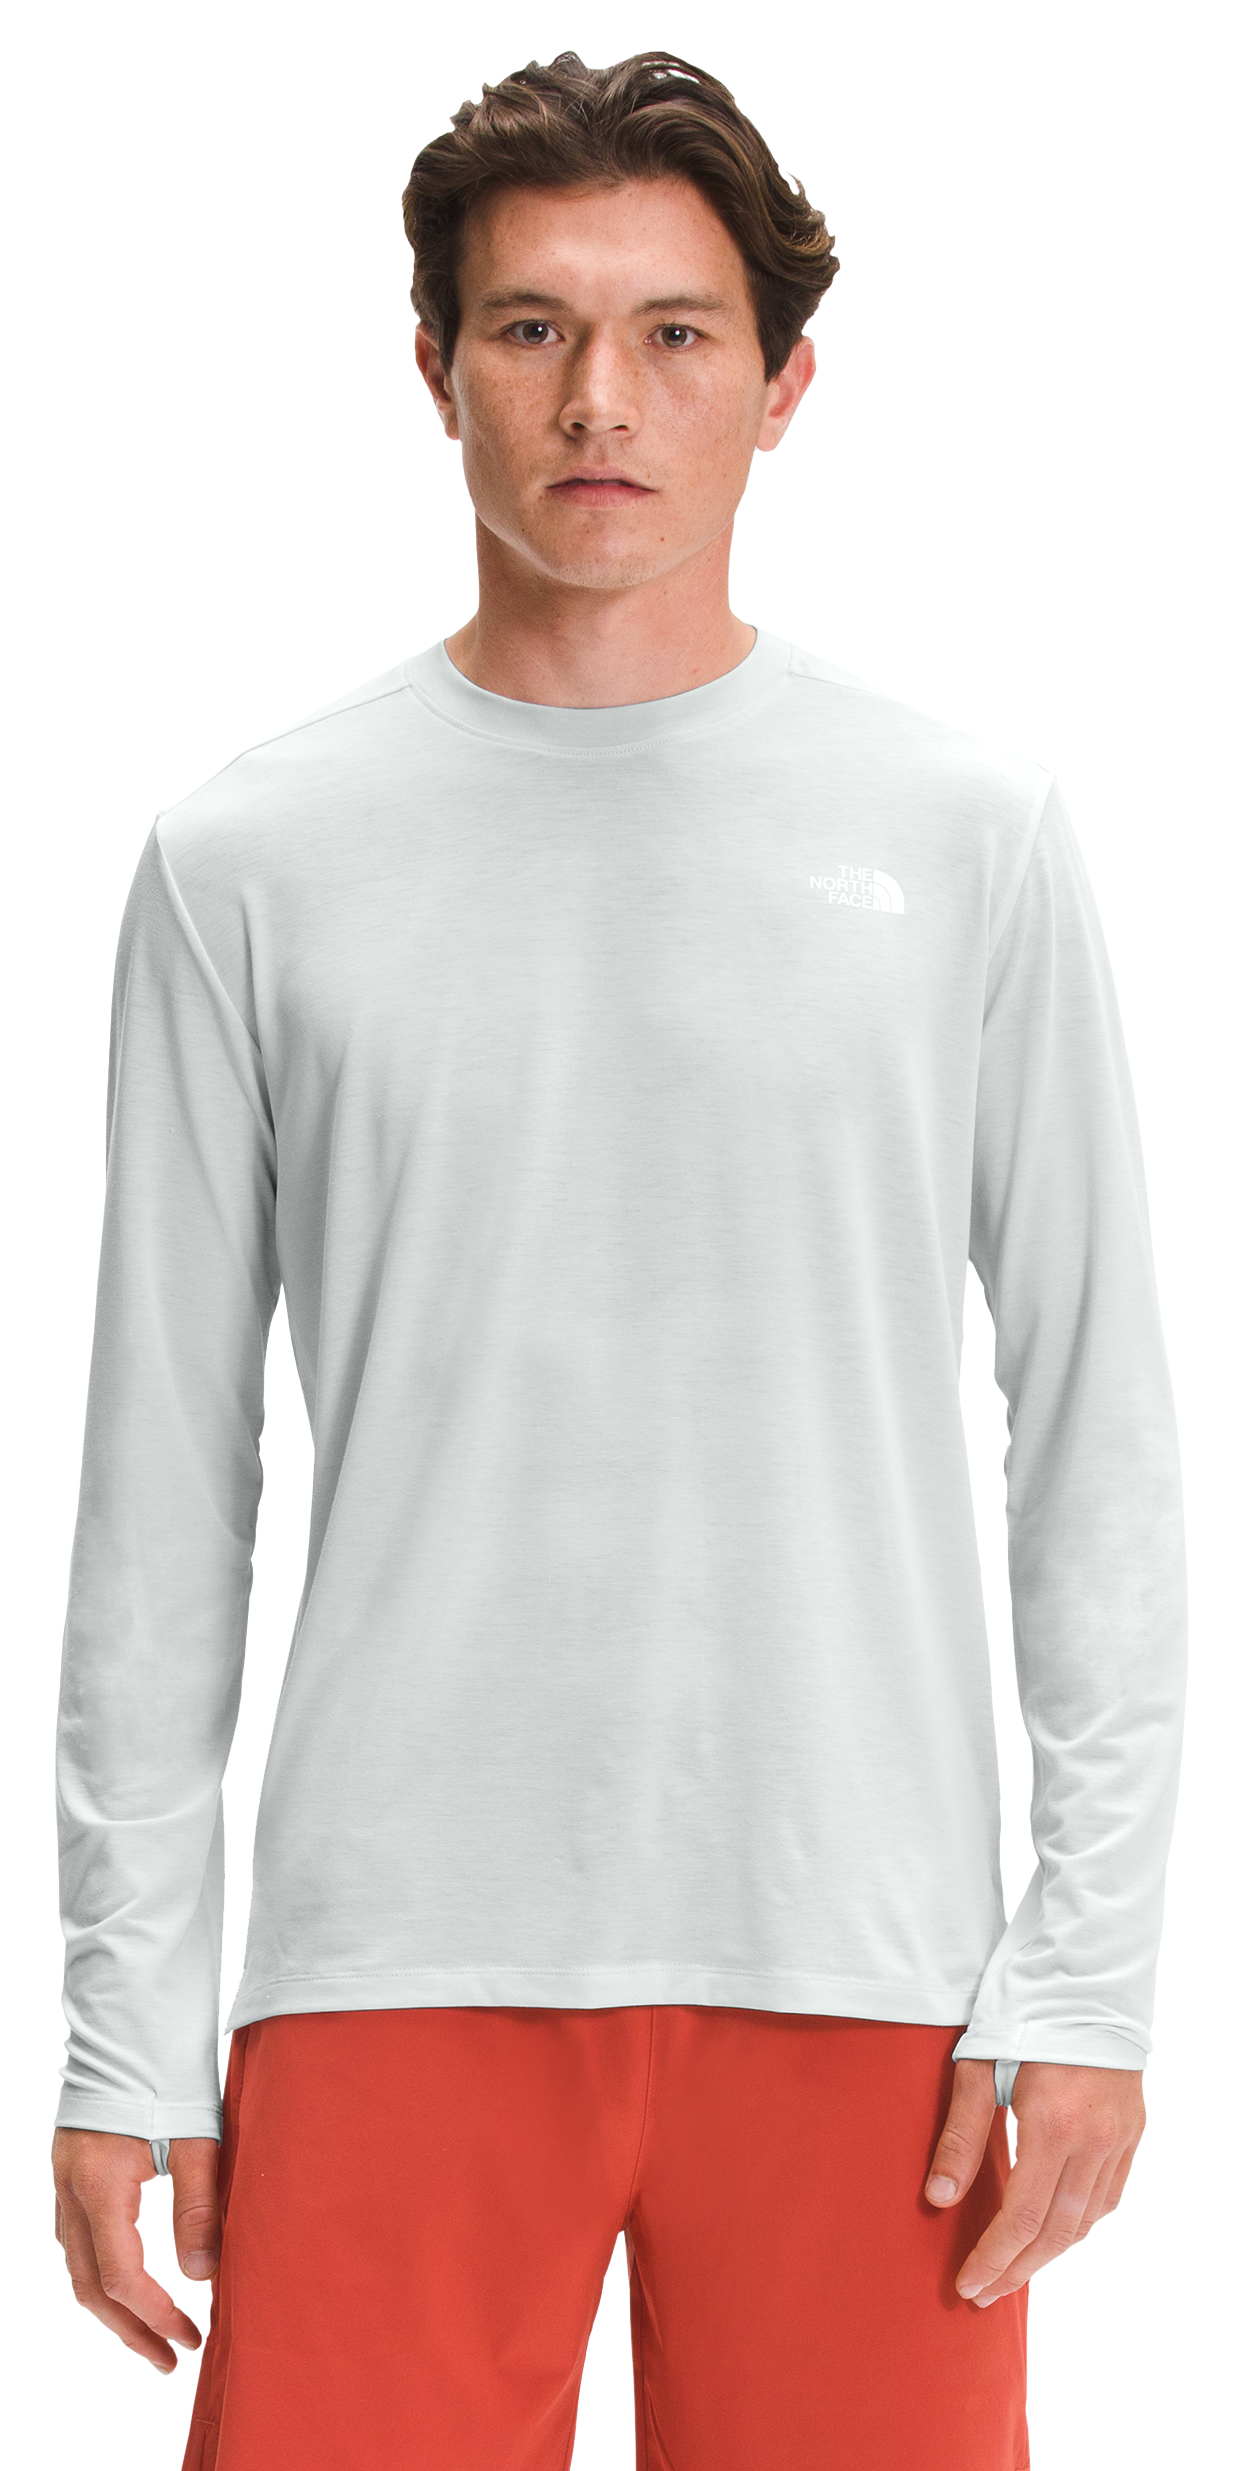 The North Face Wander Long-Sleeve Shirt for Men - Tin Grey - S